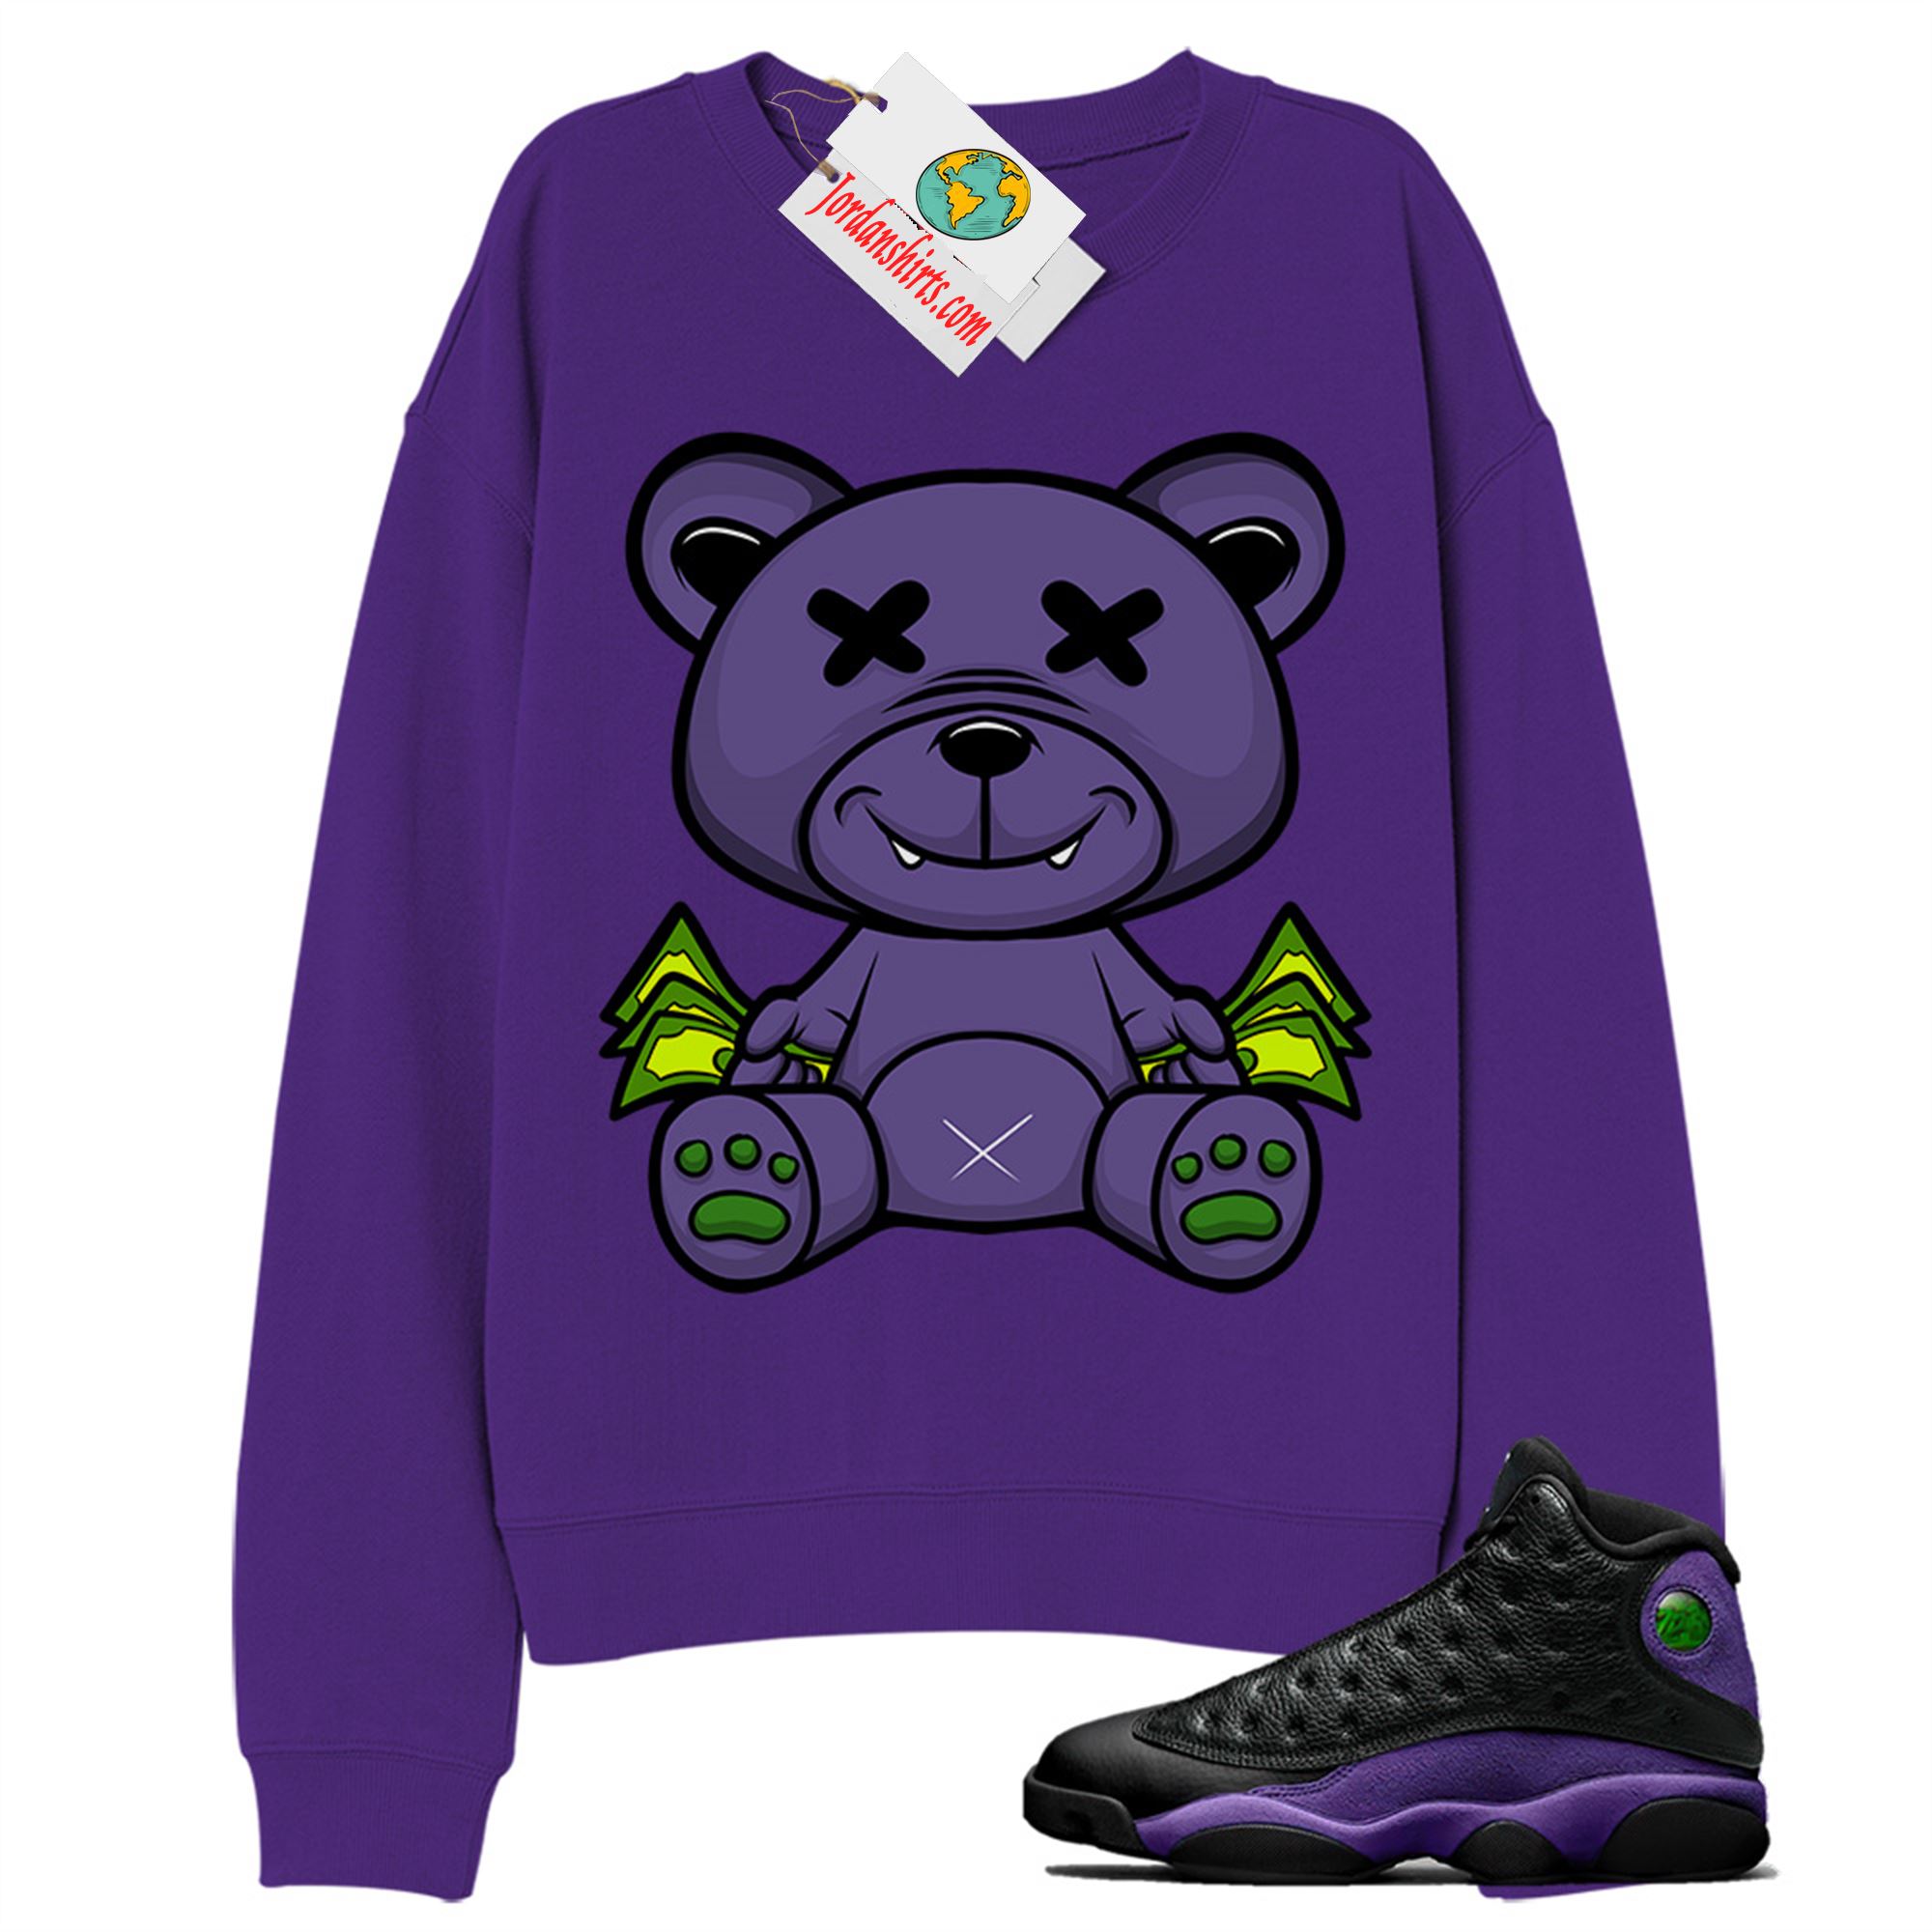 Jordan 13 Sweatshirt, Rich Teddy Bear Purple Sweatshirt Air Jordan 13 Court Purple 13s Plus Size Up To 5xl